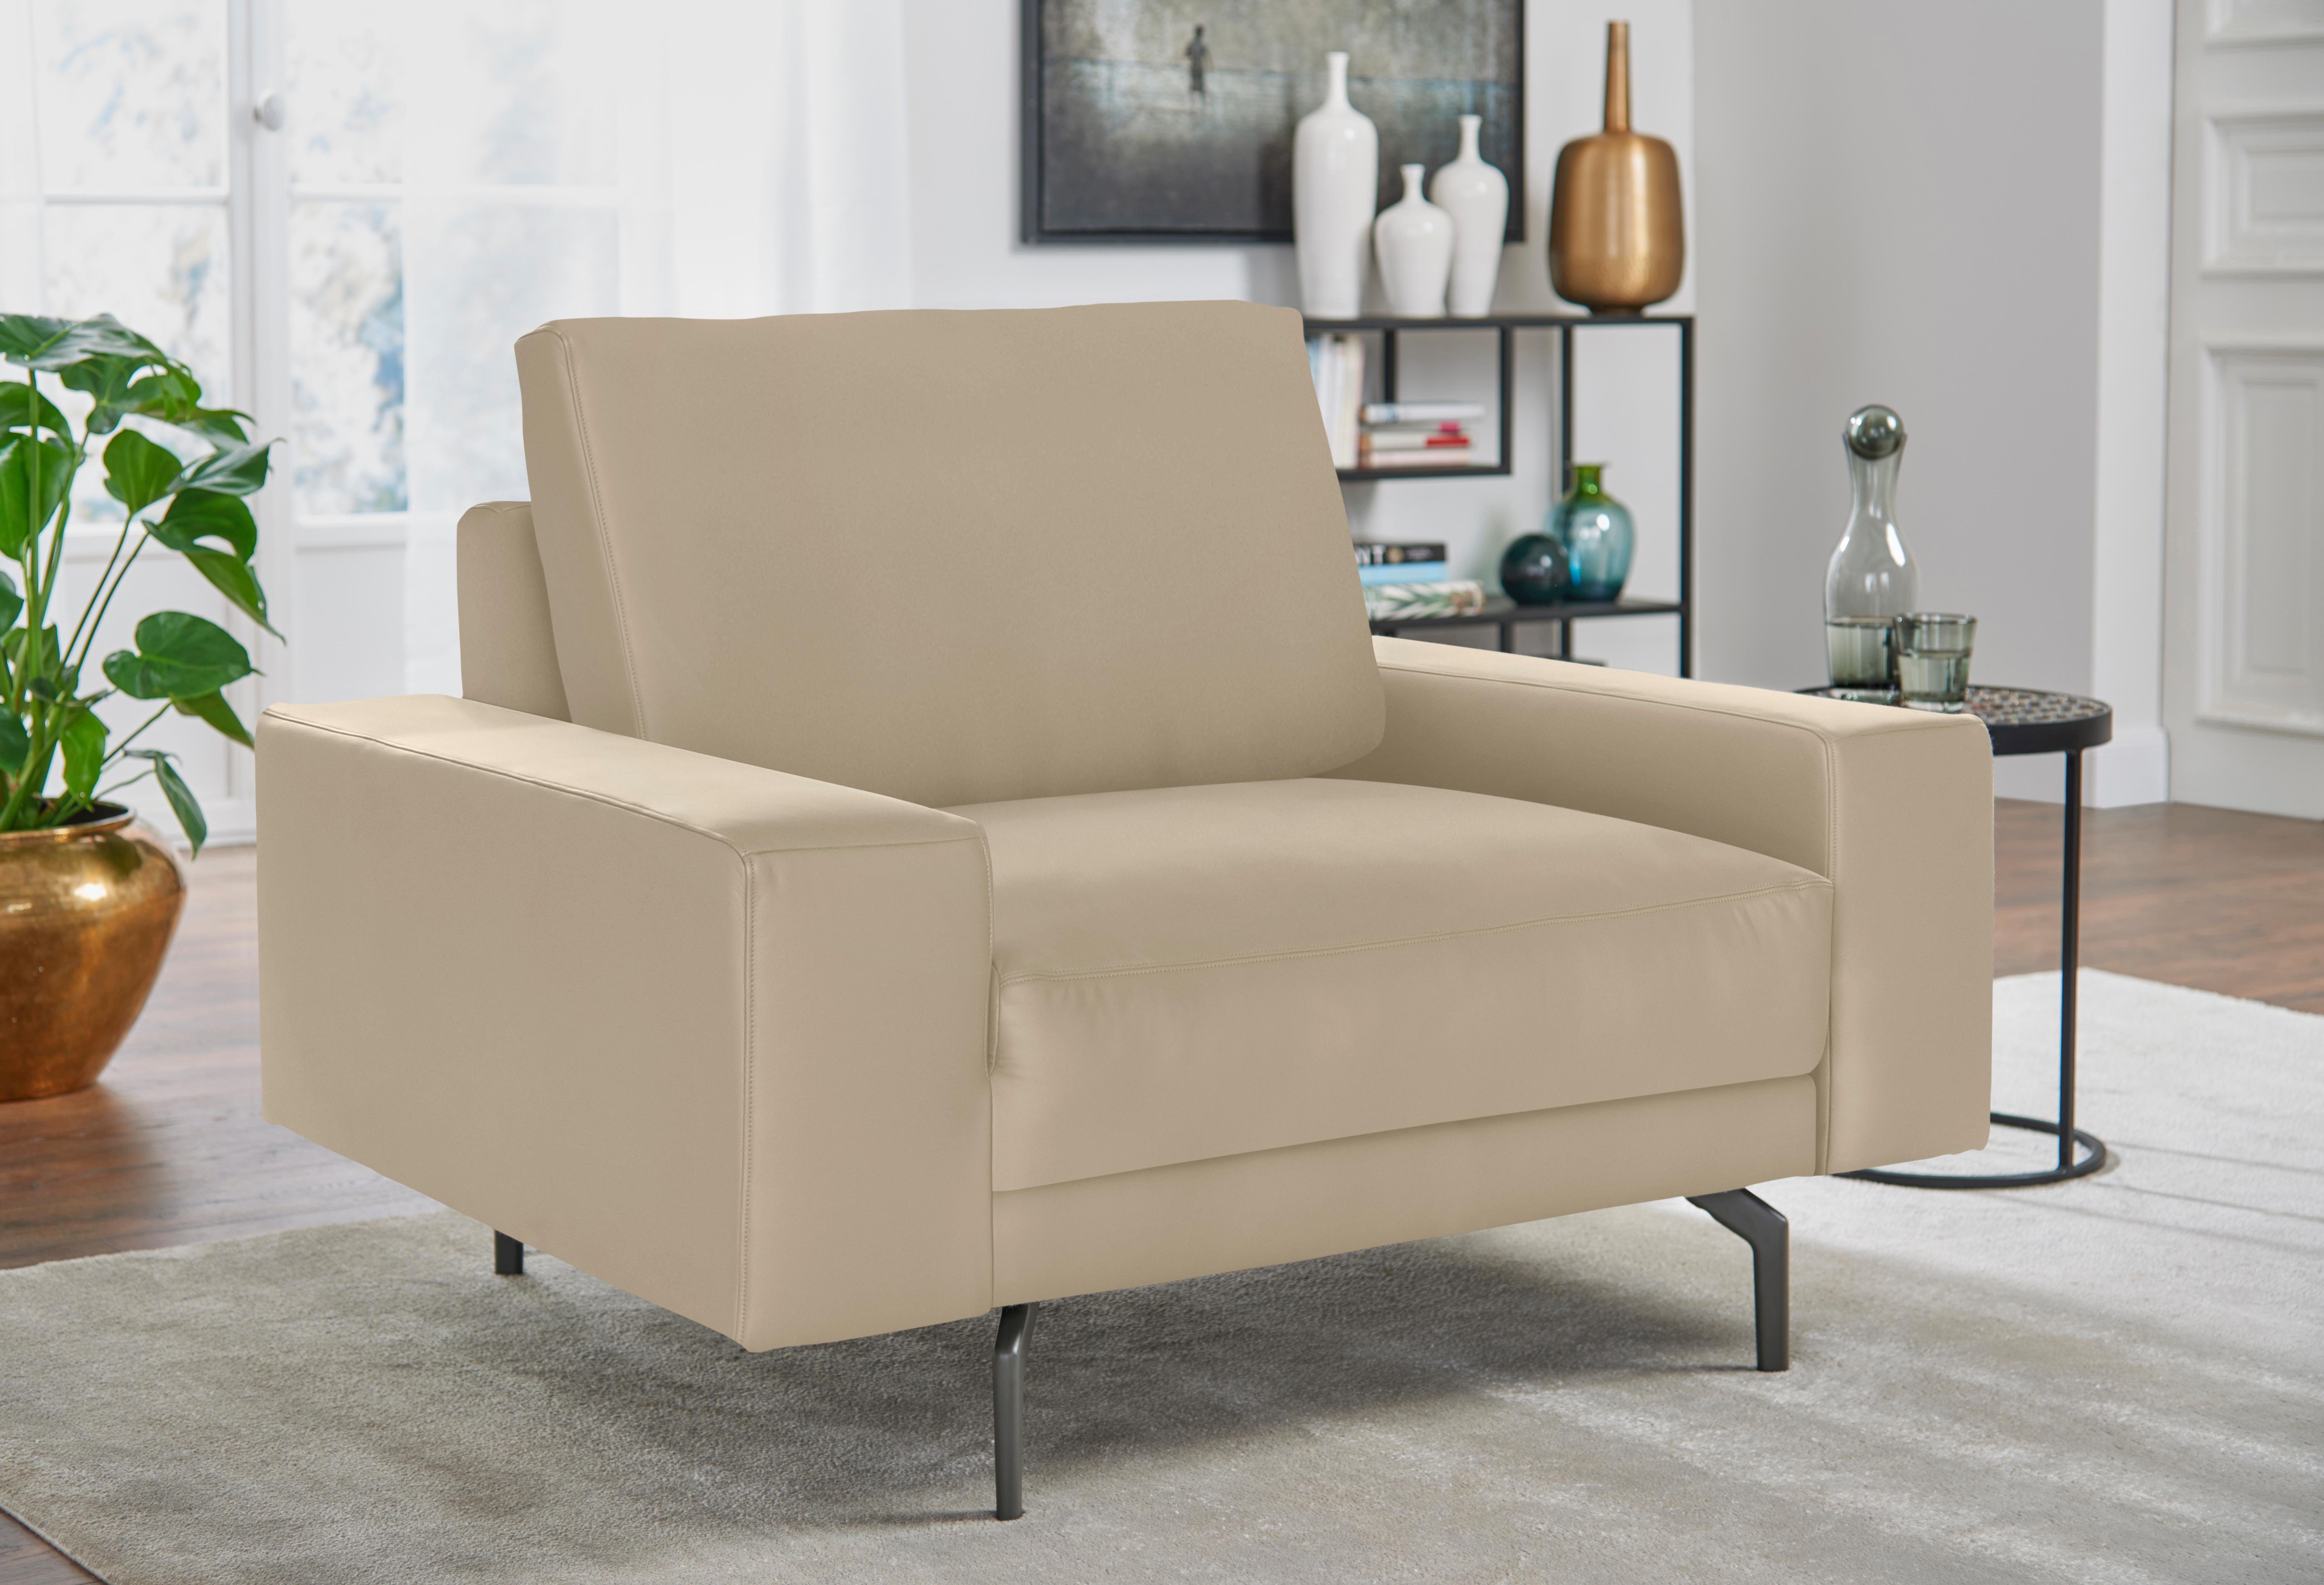 Breite breit umbragrau, Alugussfüße Armlehne sofa Sessel hs.450, niedrig, cm hülsta 120 in